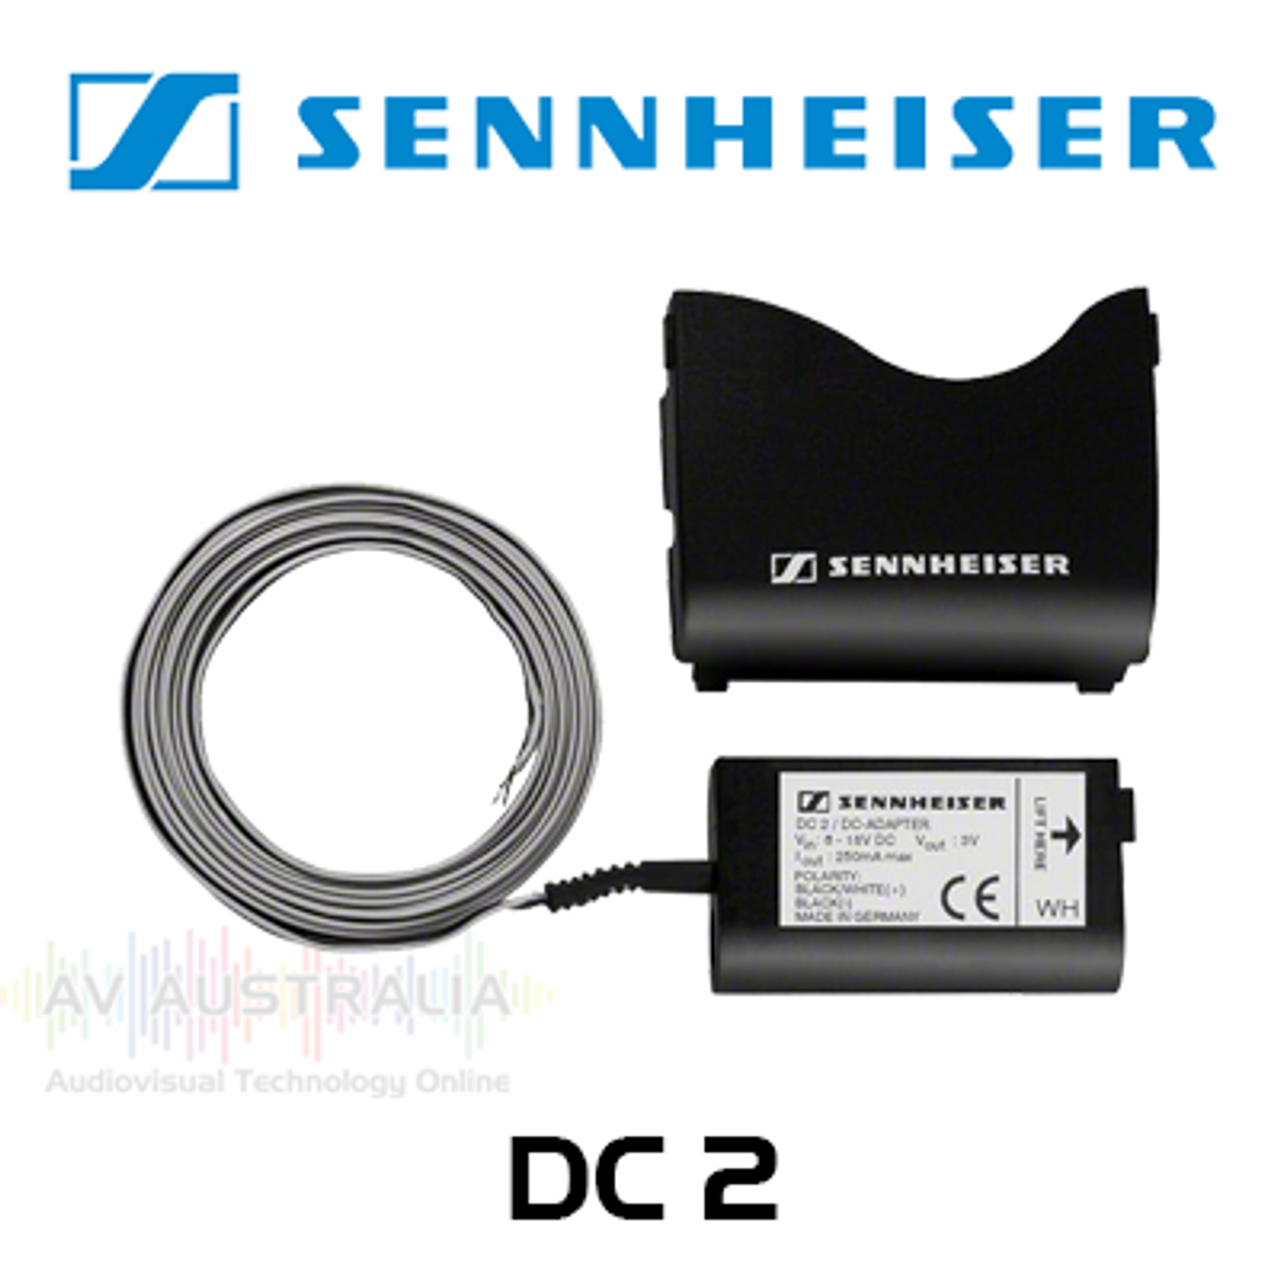 Sennheiser DC2 DC Power Adapter